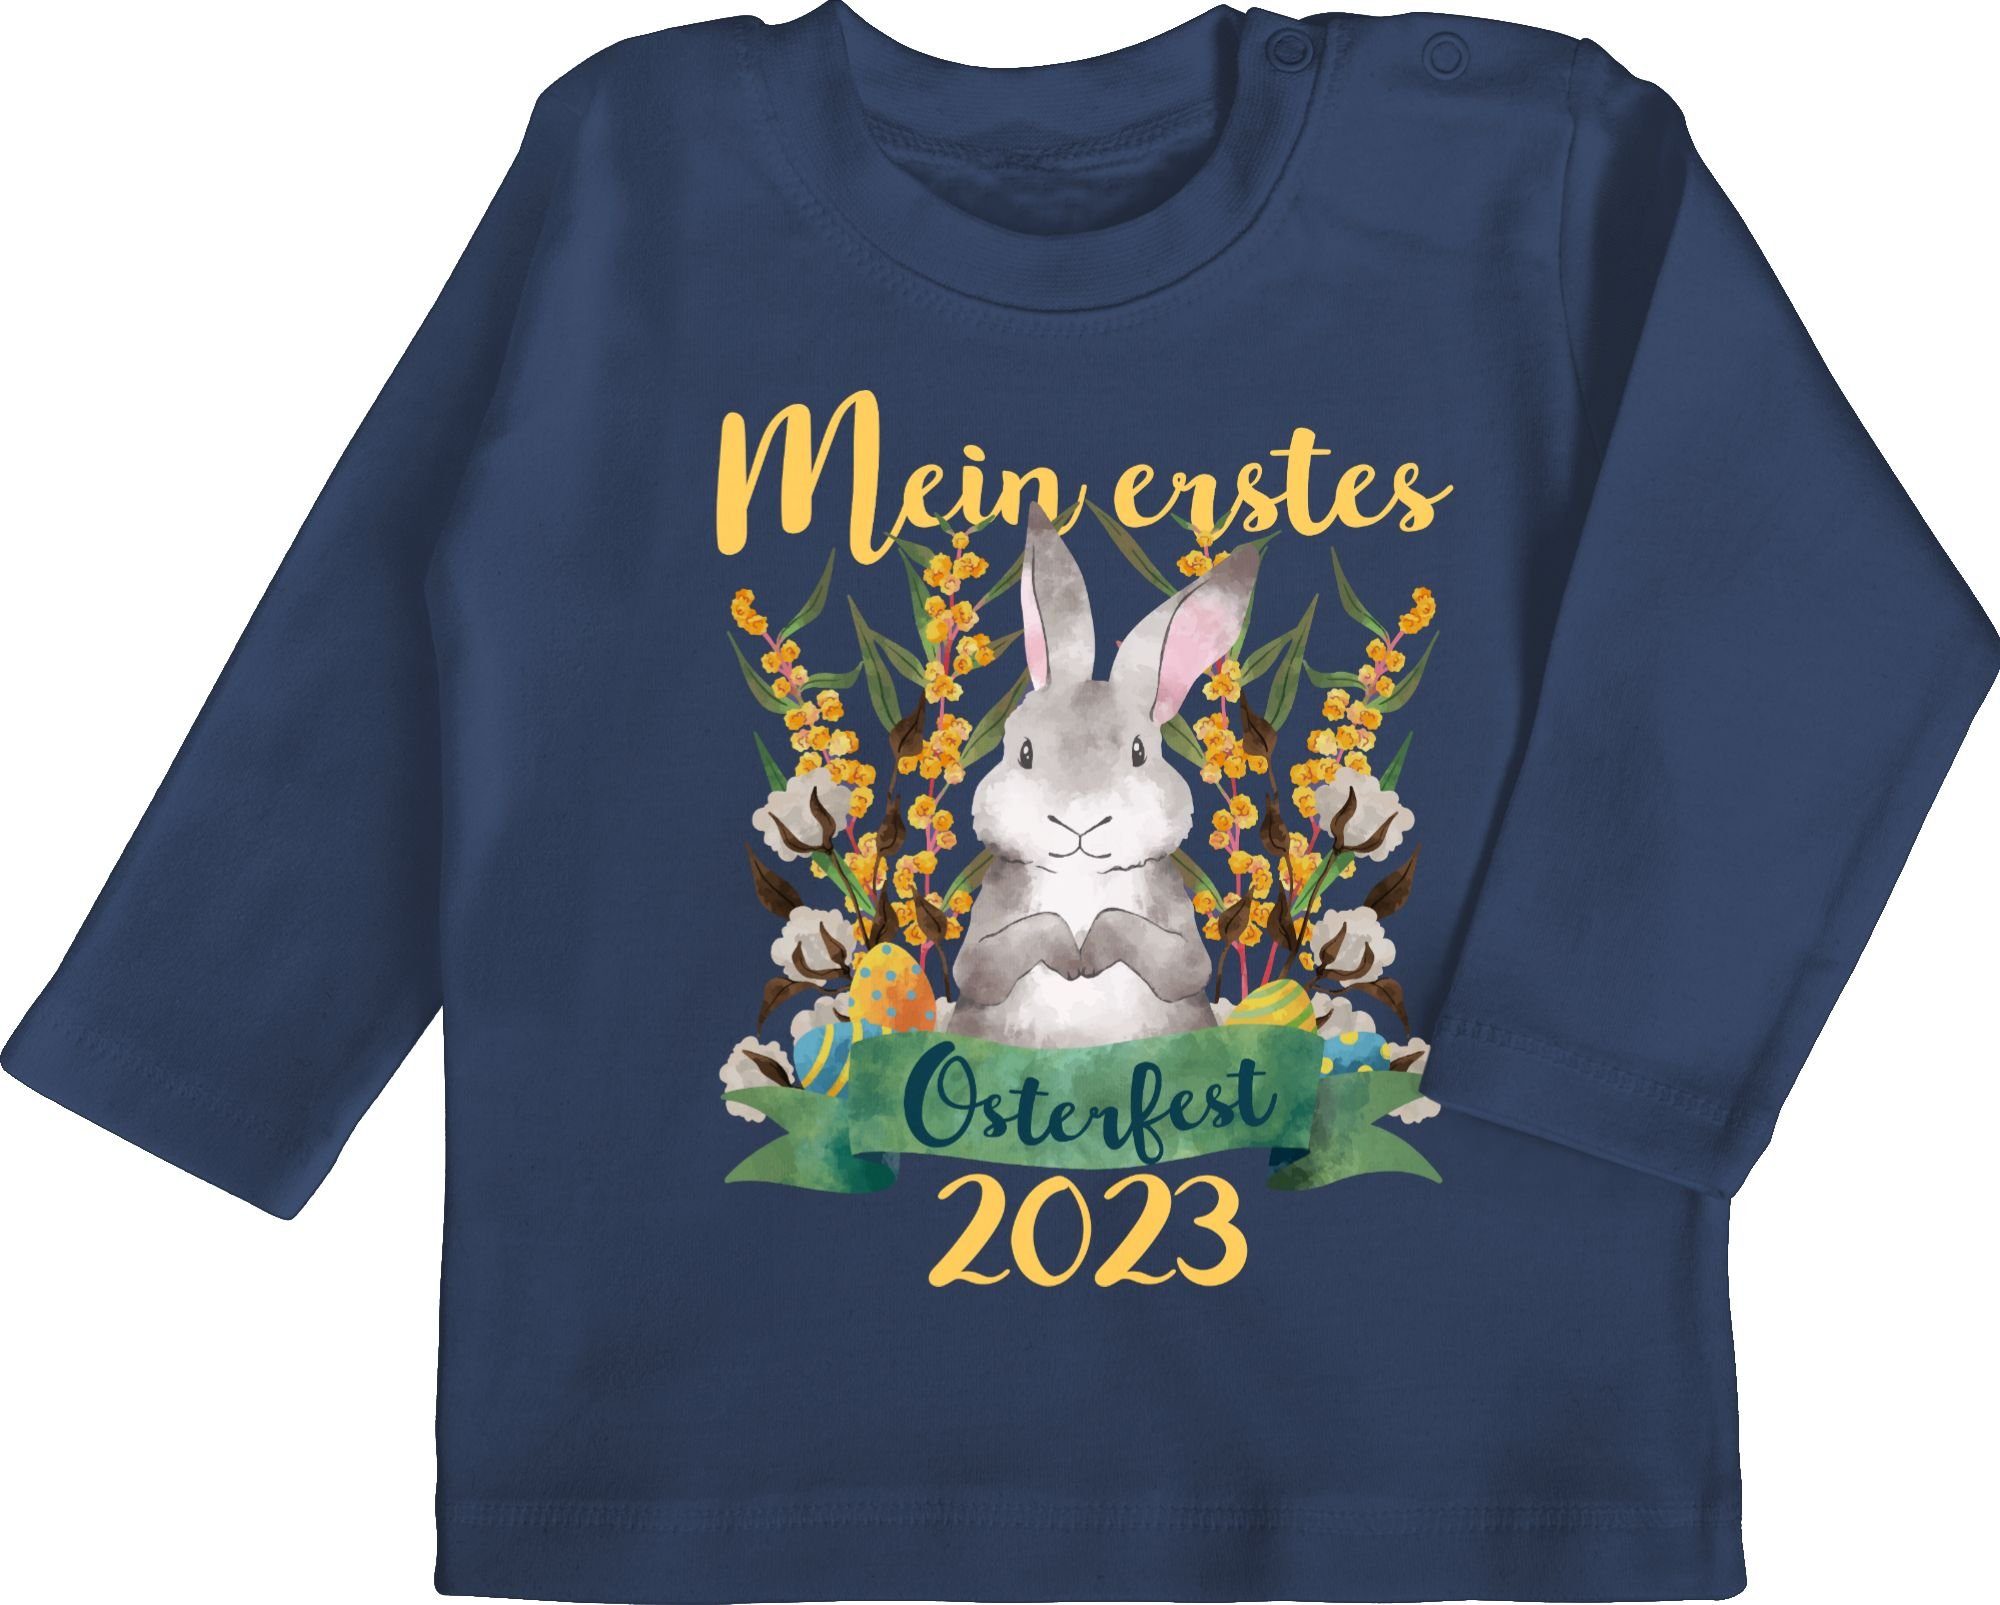 Ostergeschenke T-Shirt Navy Osterfest erstes Blau 1 Shirtracer Mein grün 2023 -